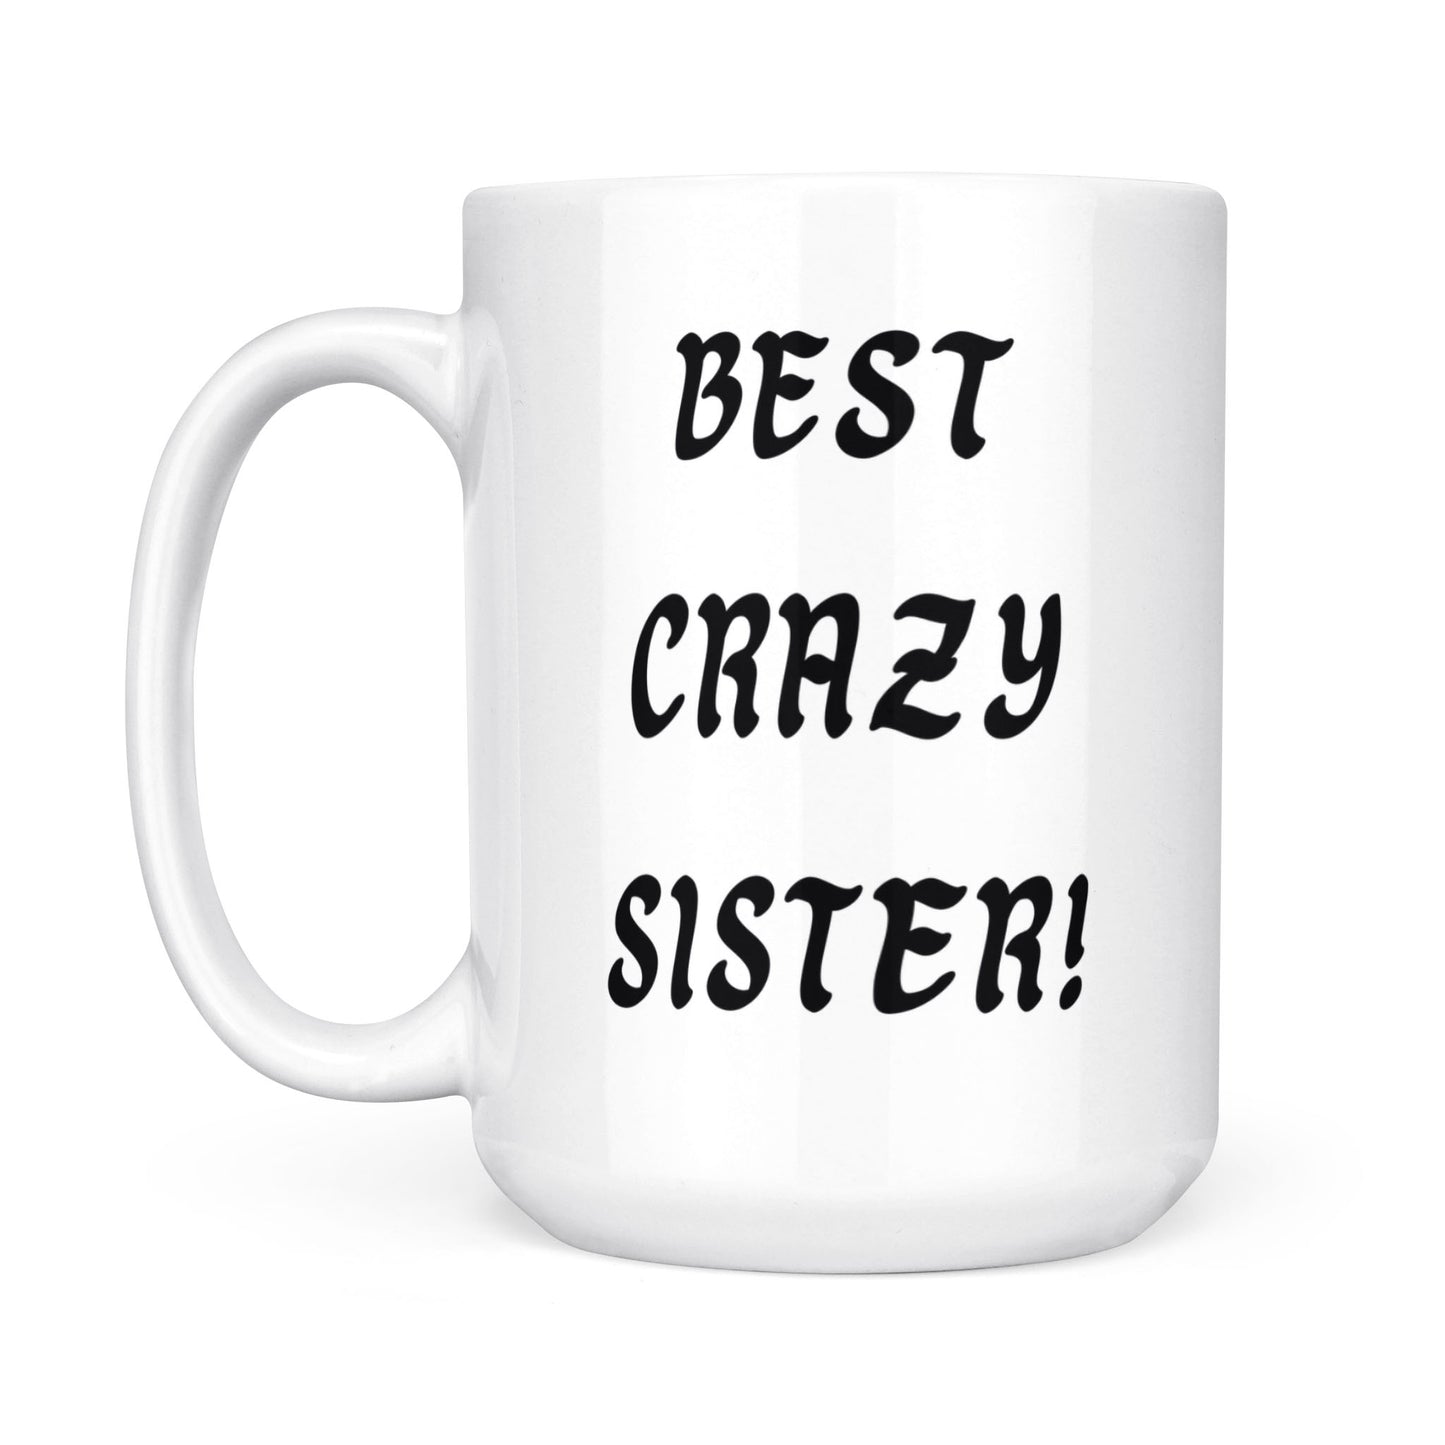 Best Crazy Sister Mugs